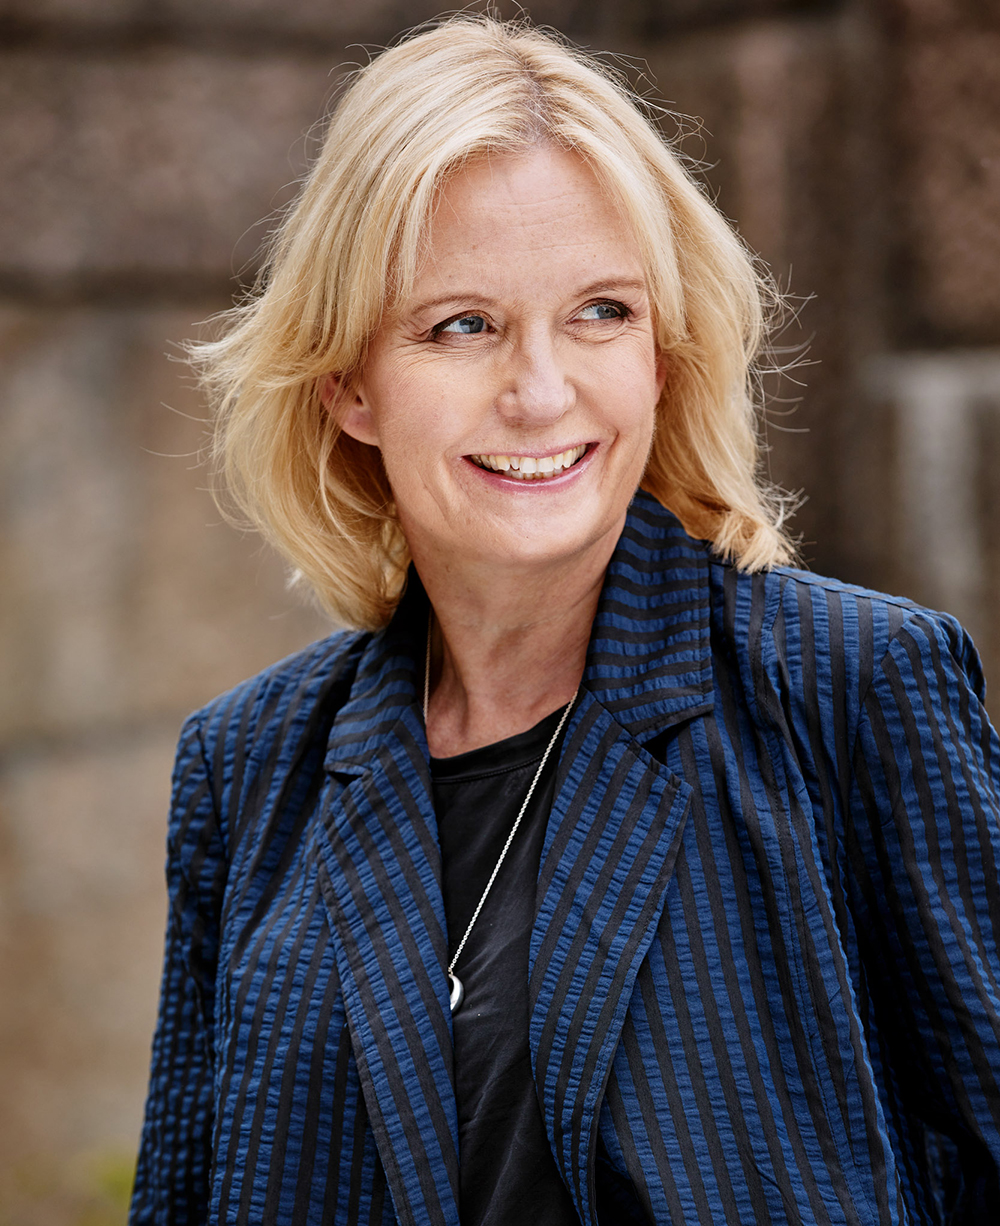 Åsa Falkman, Founding Partner